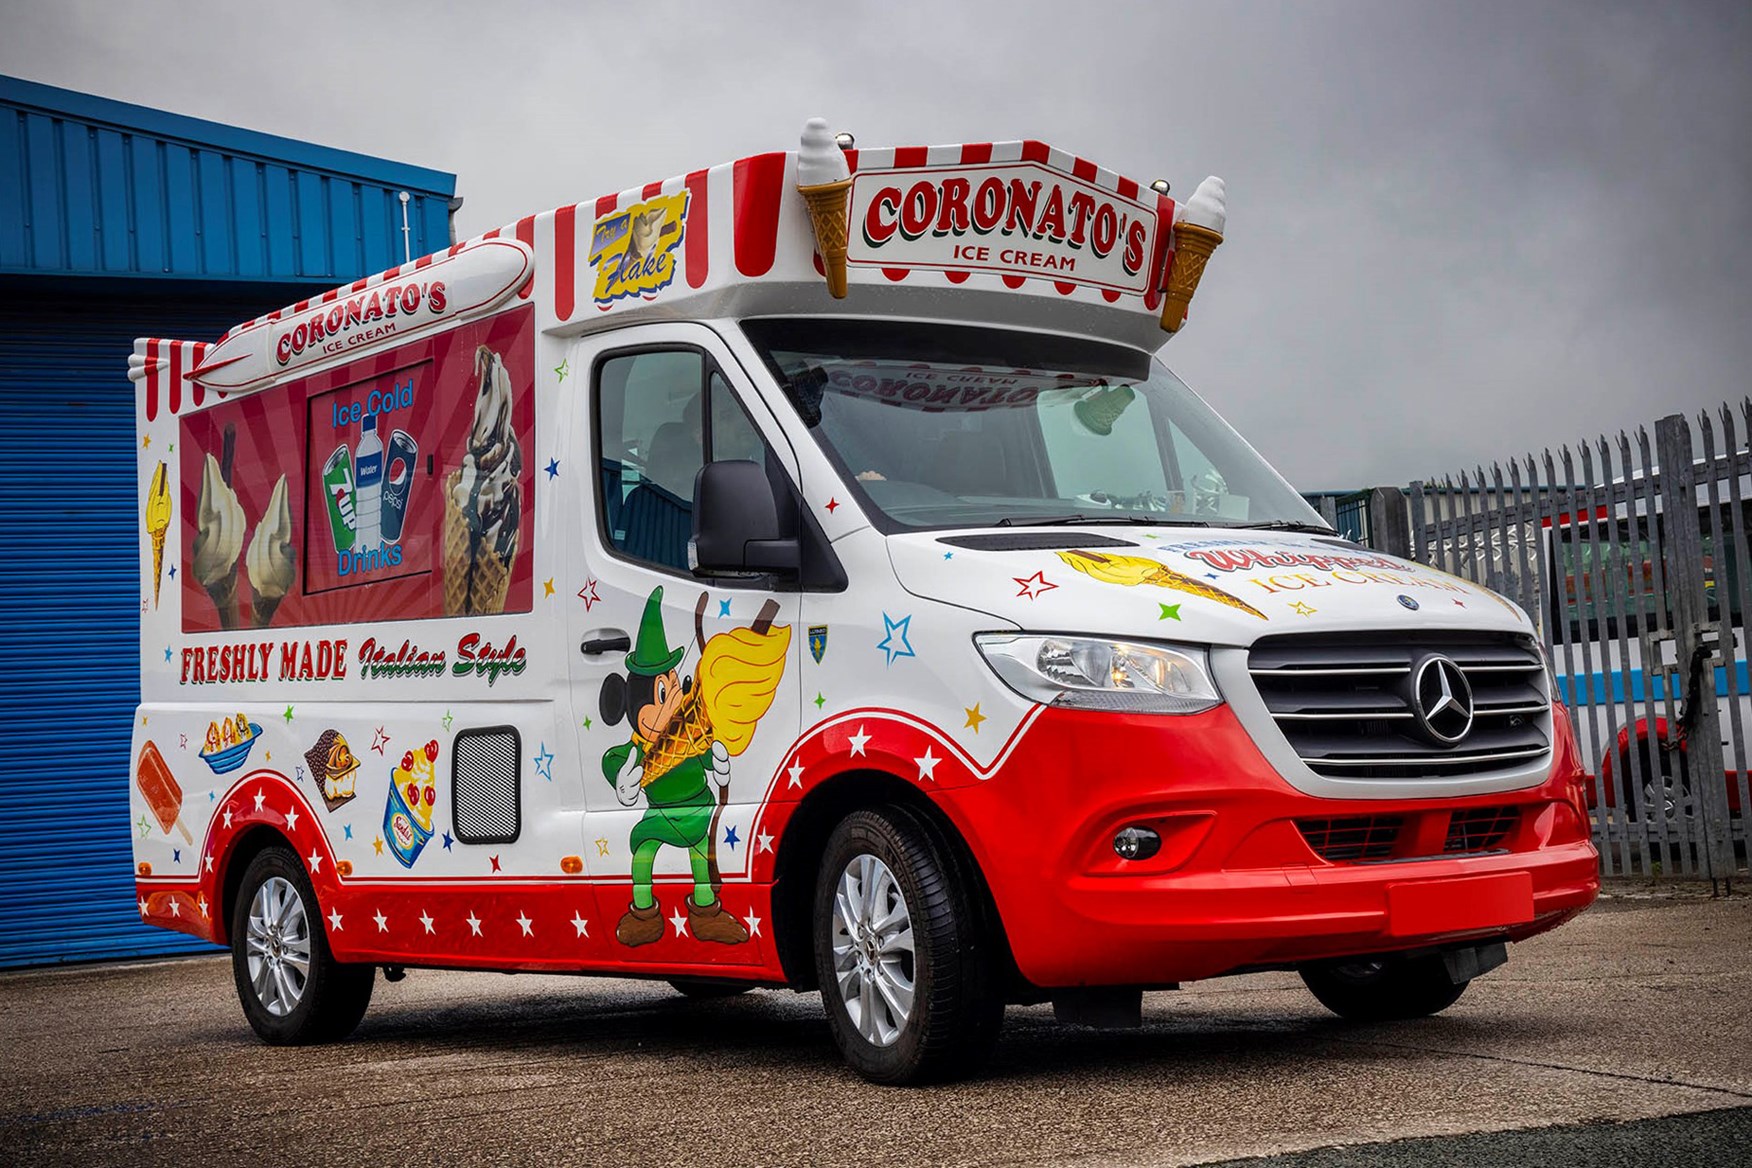 whitby morrison ice cream van for sale